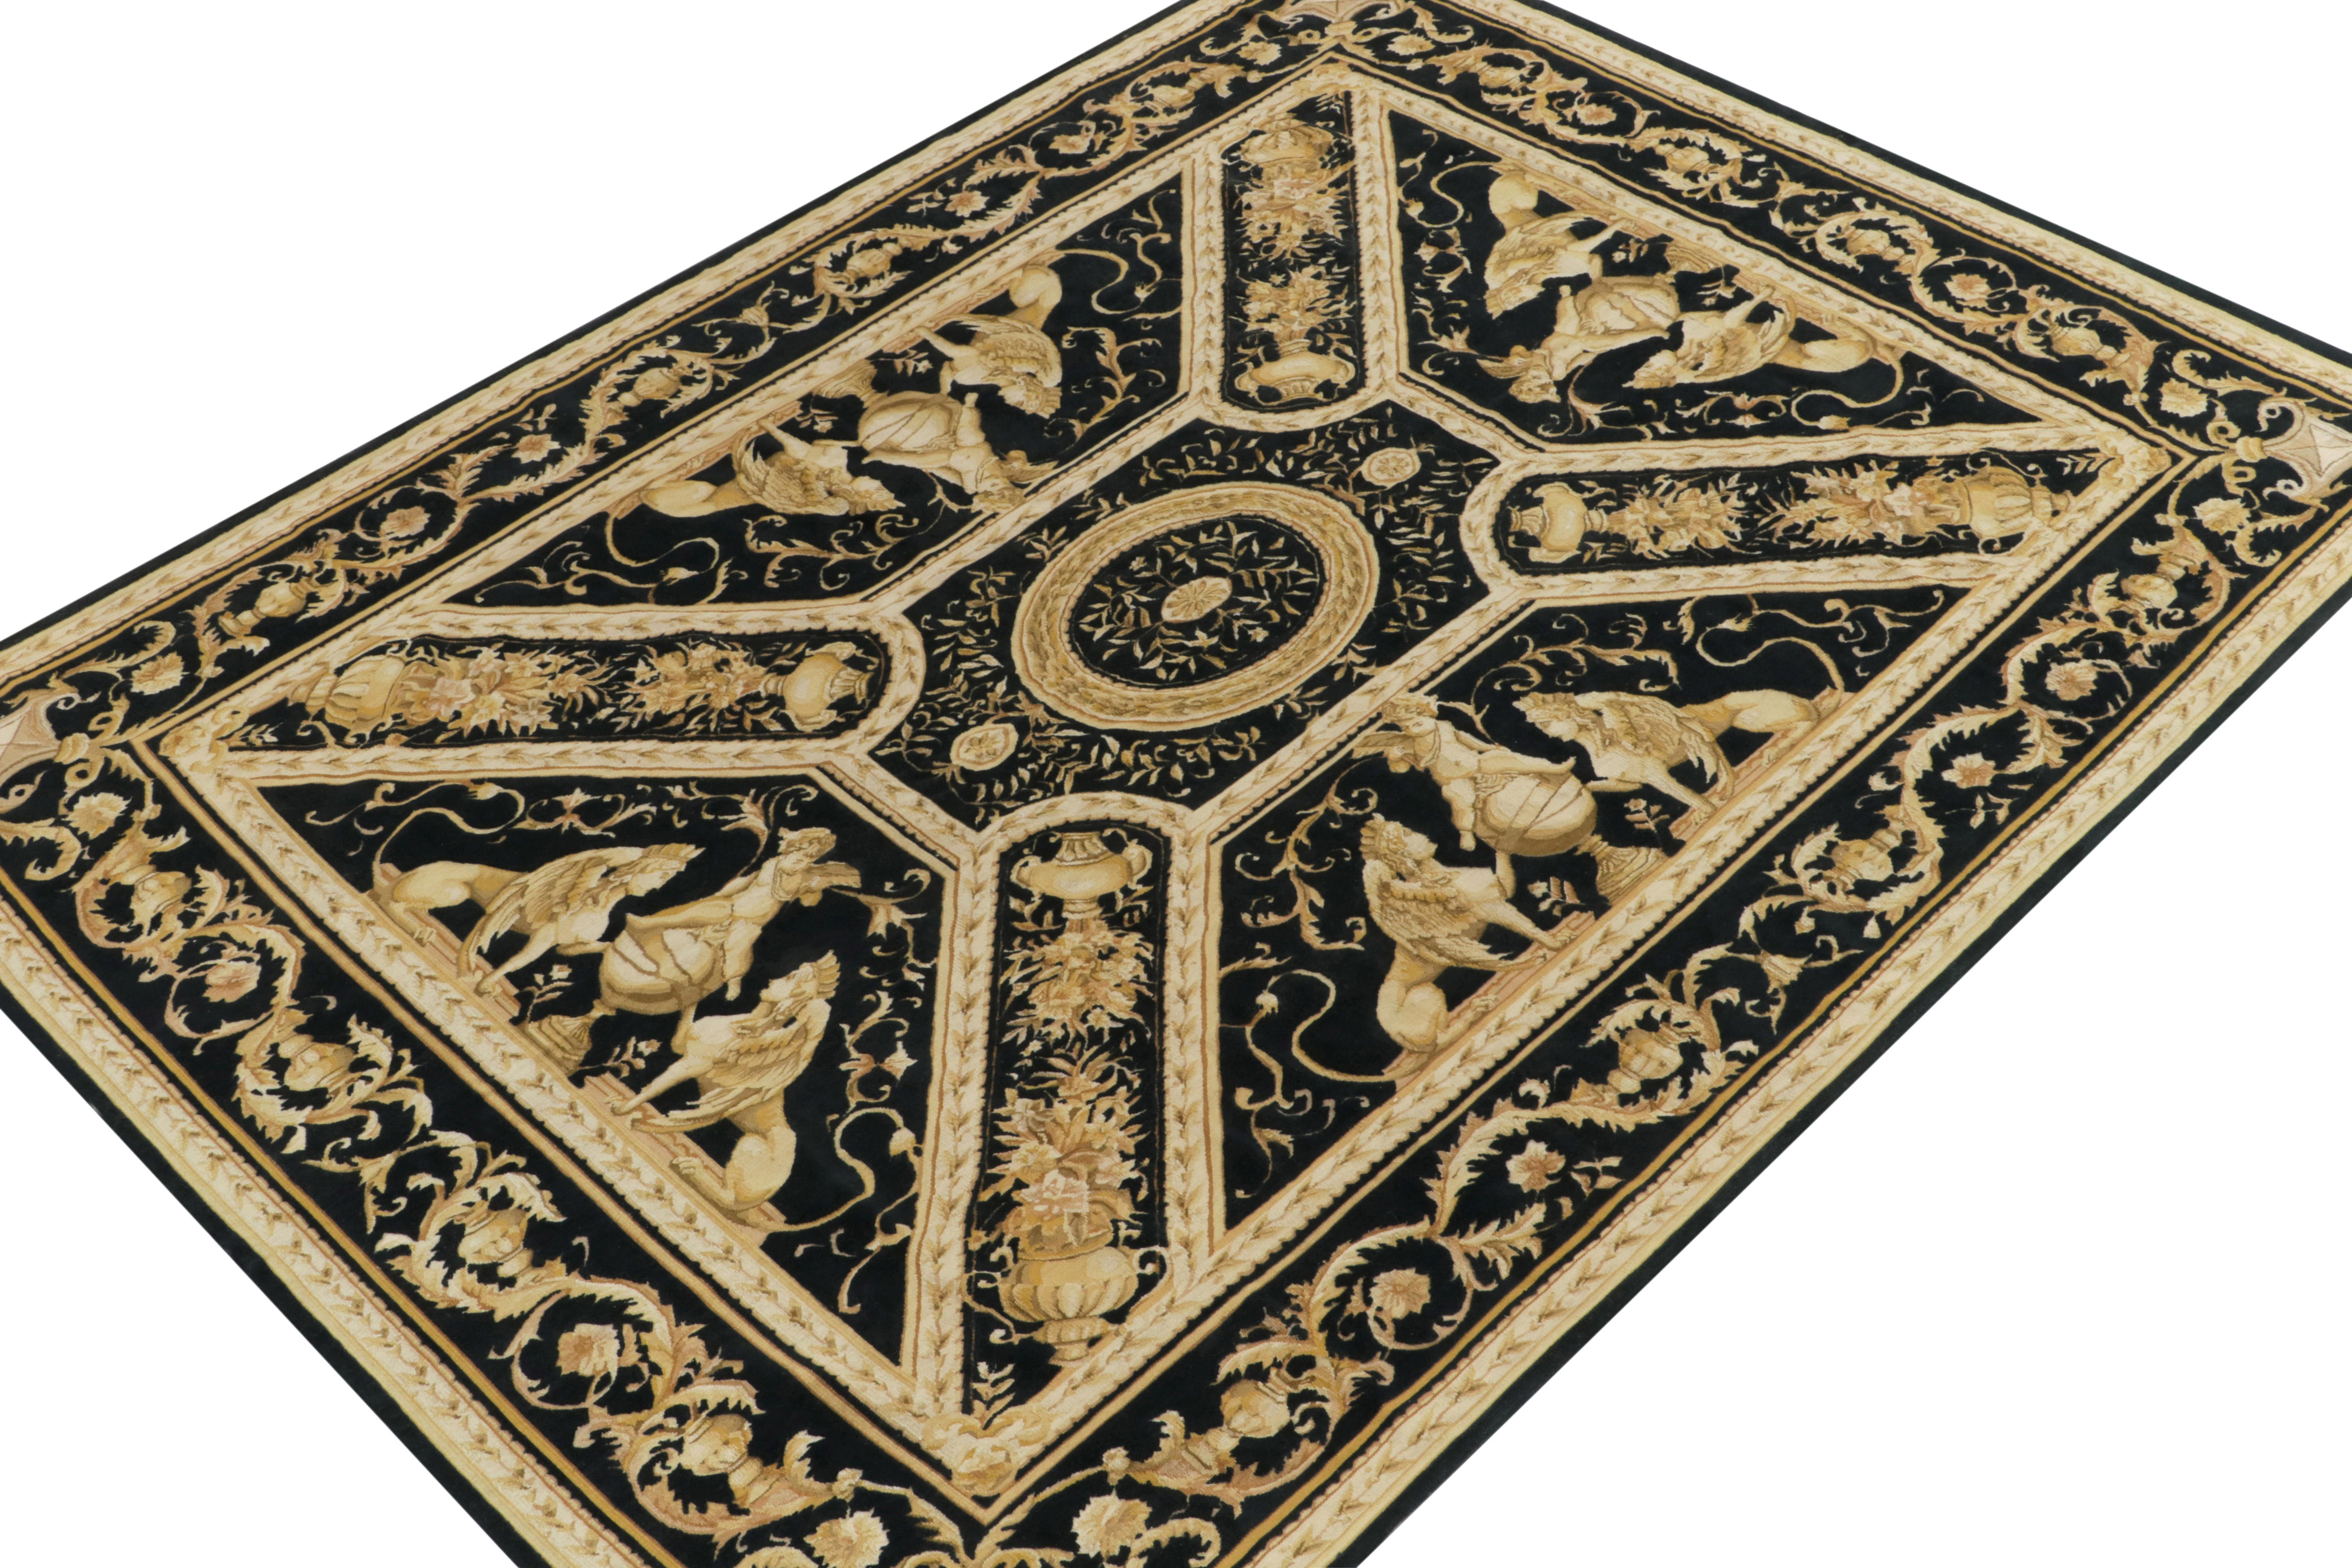 Chinese Rug & Kilim's Tudor Style Flatweave Rug in Black, Gold & White Medallion Pattern For Sale